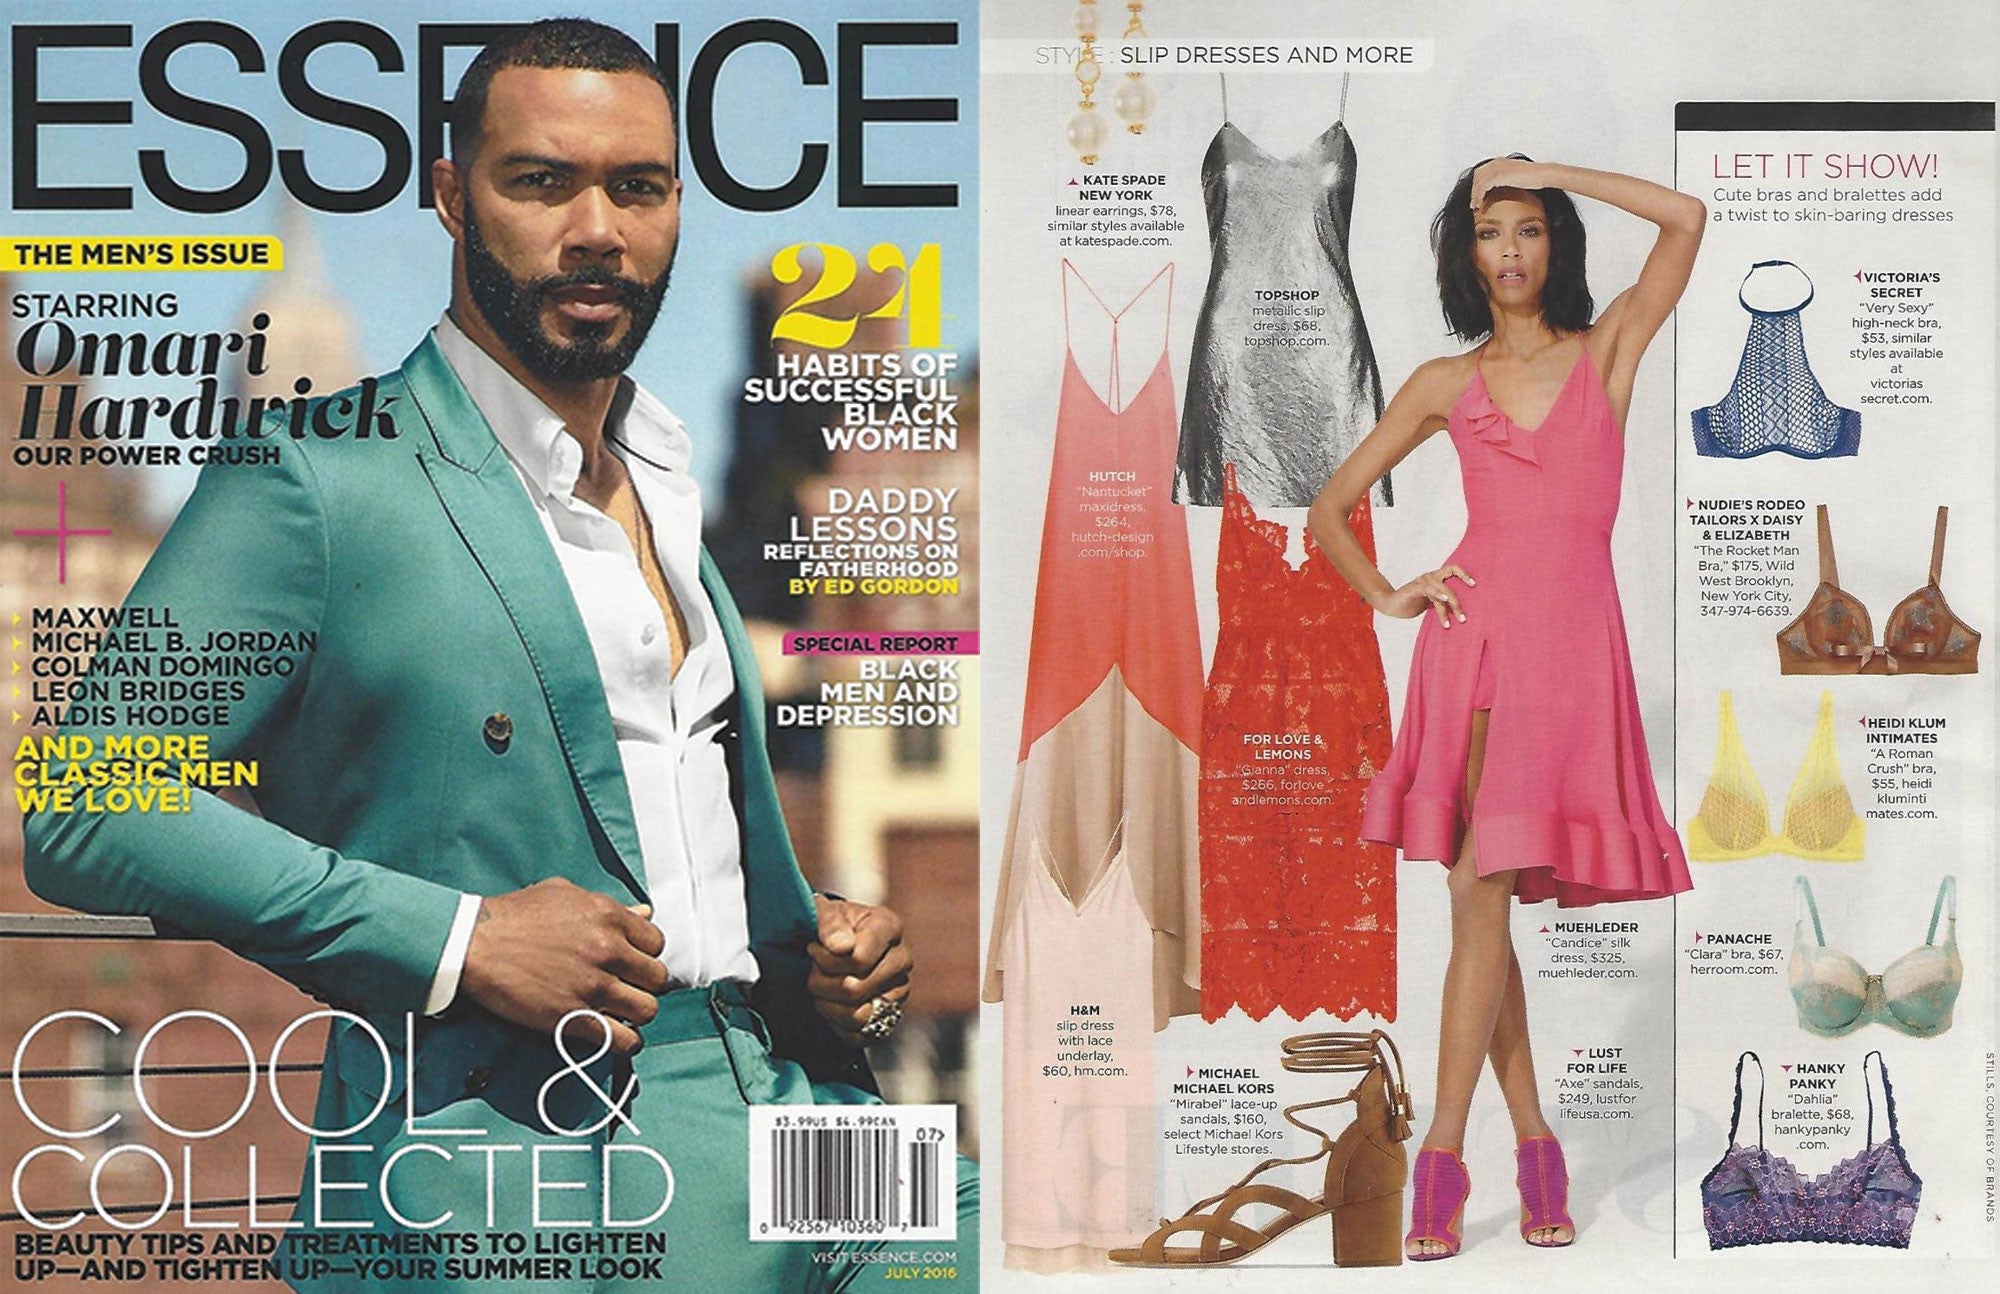 Muehleder Candice Dress In Essence Magazine July Issue